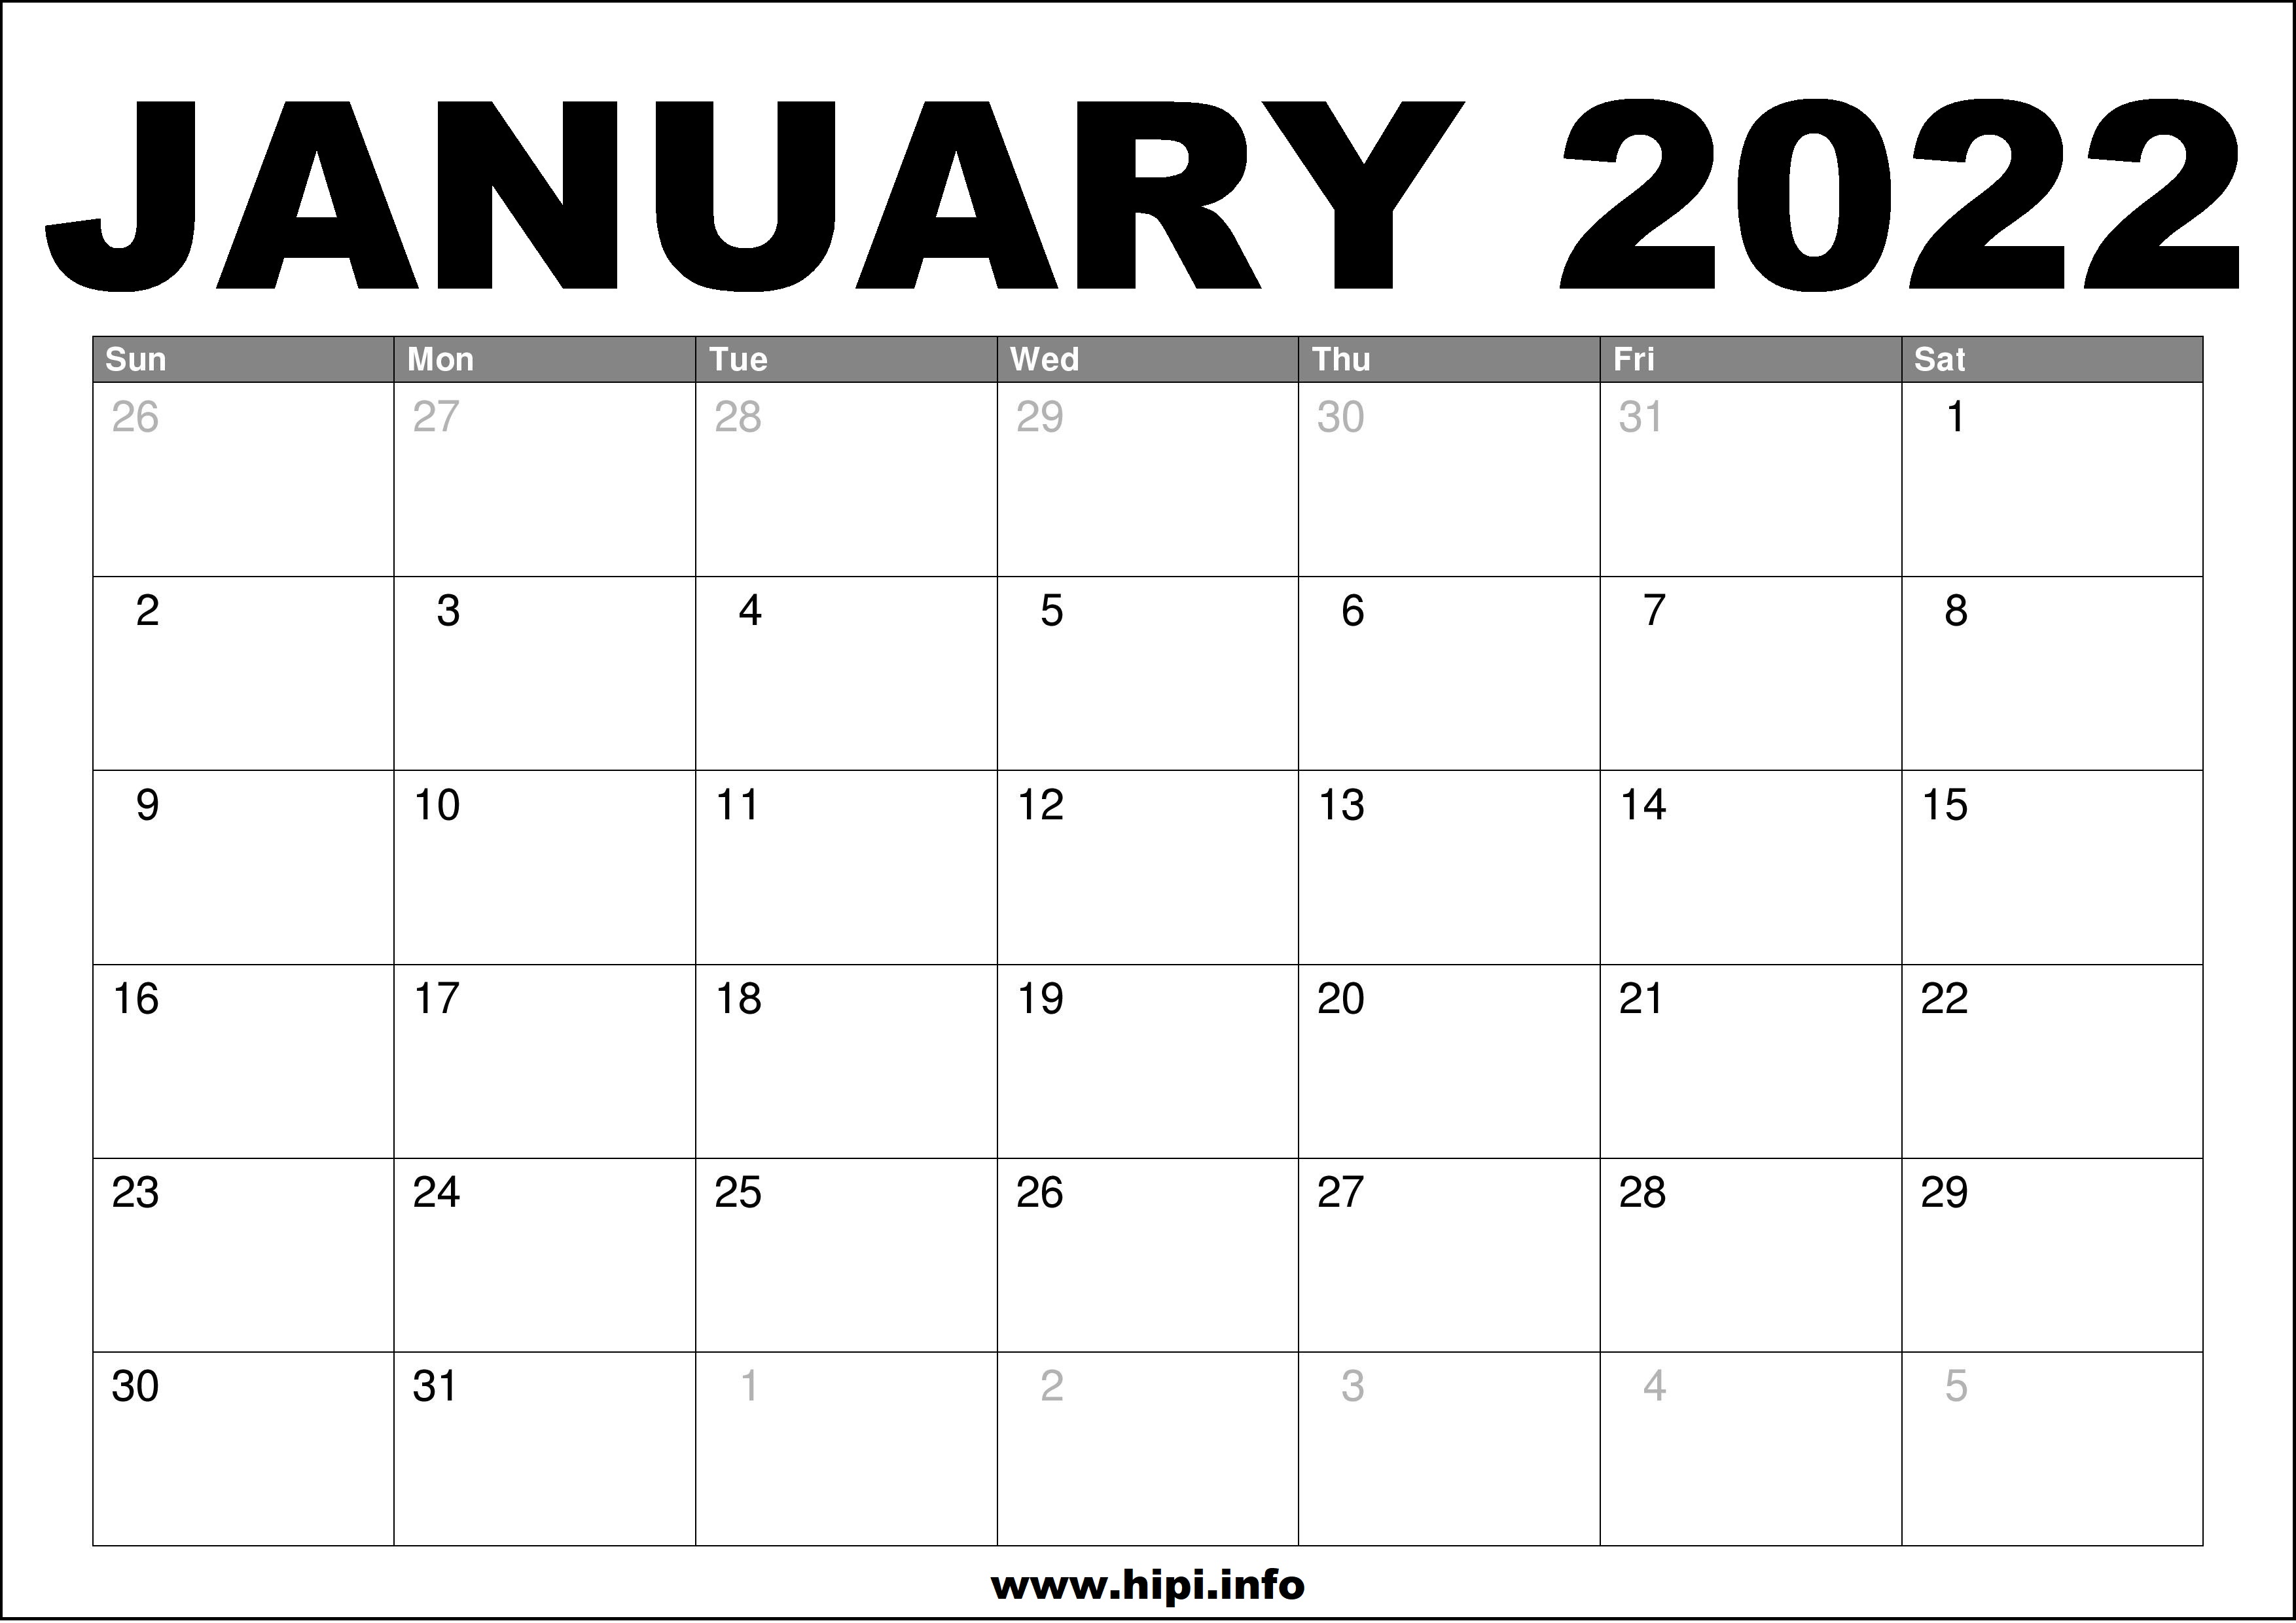 Free January Calendar 2022 January 2022 Calendar Printable Free - Hipi.info | Calendars Printable Free